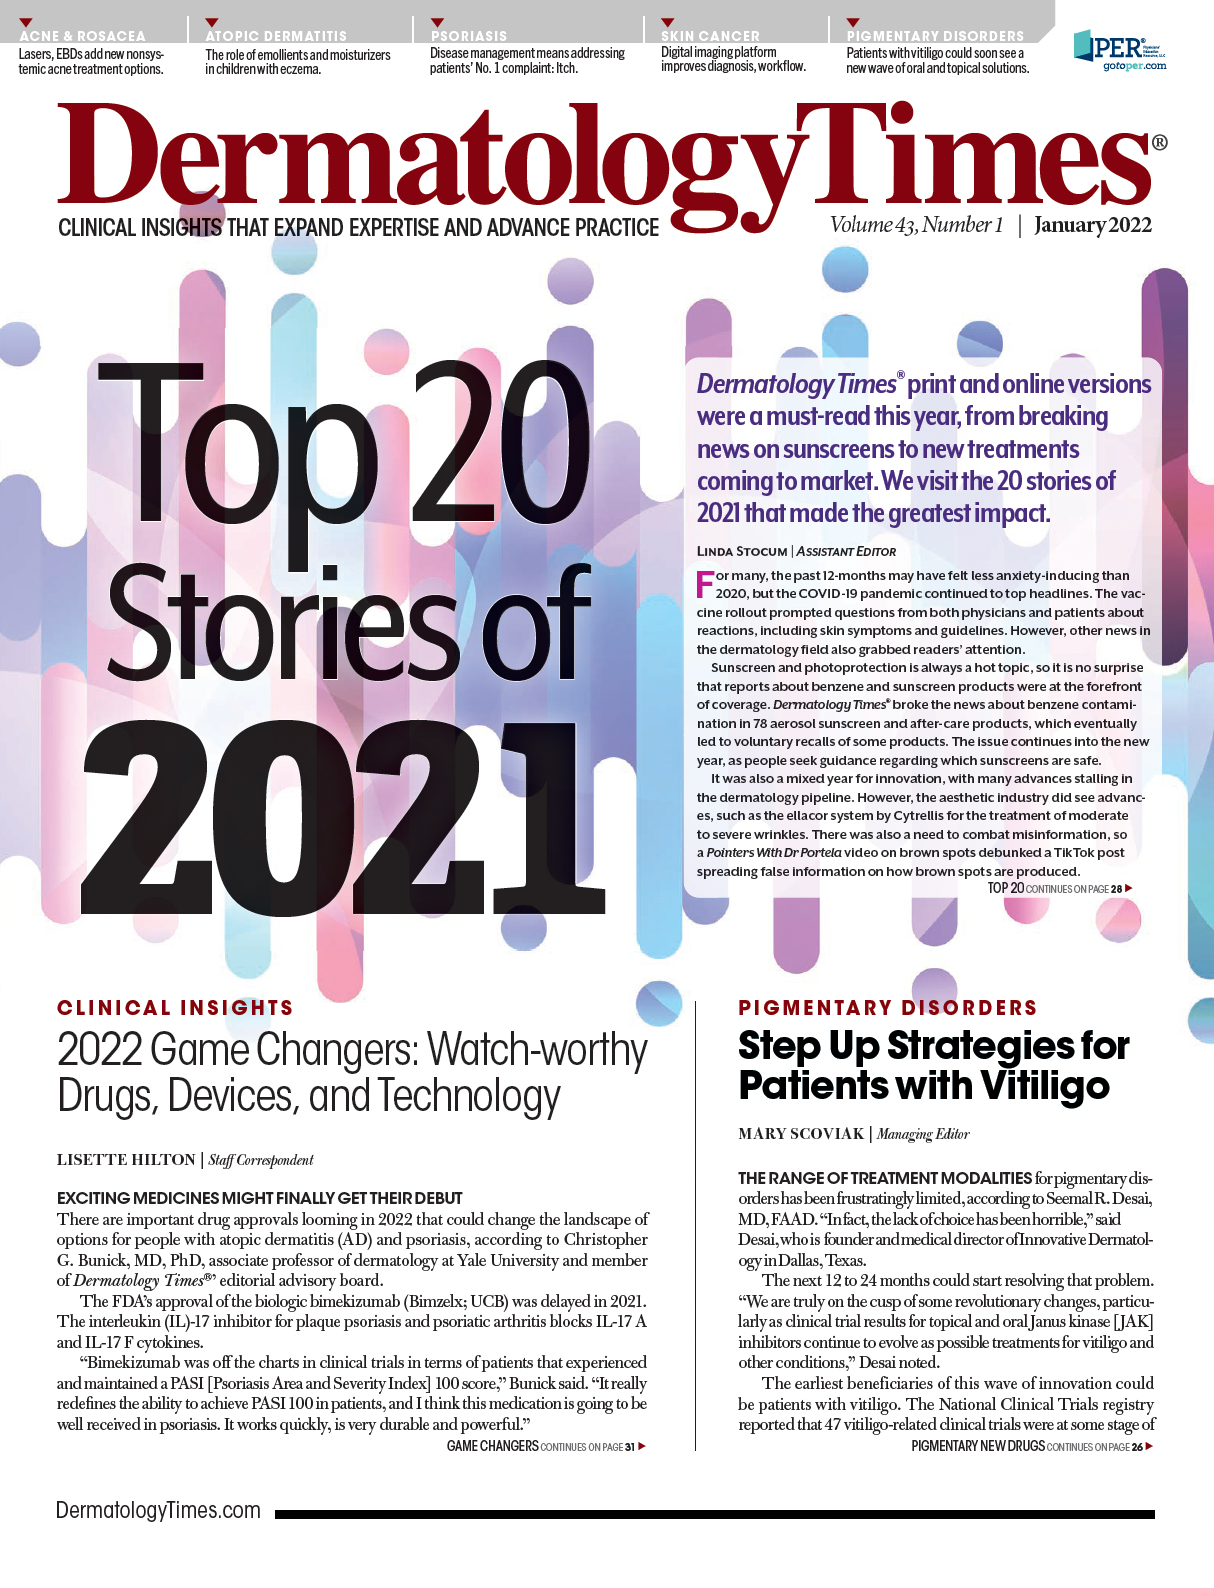 Dermatology Times, January 2022 (Vol. 43. No. 1)